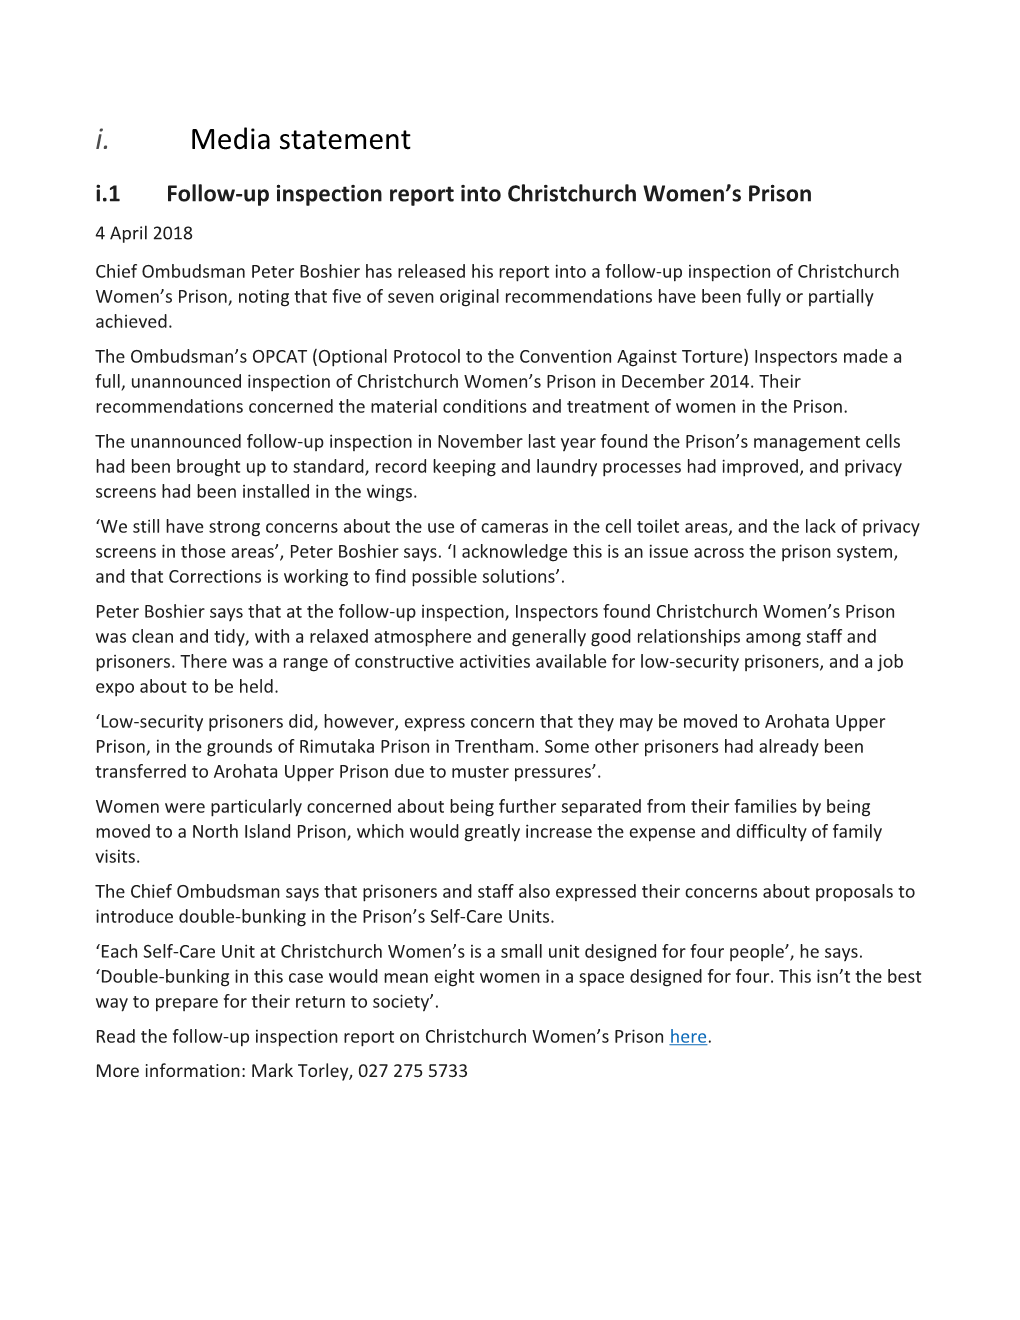 Follow-Up Inspection Report Into Christchurch Women S Prison